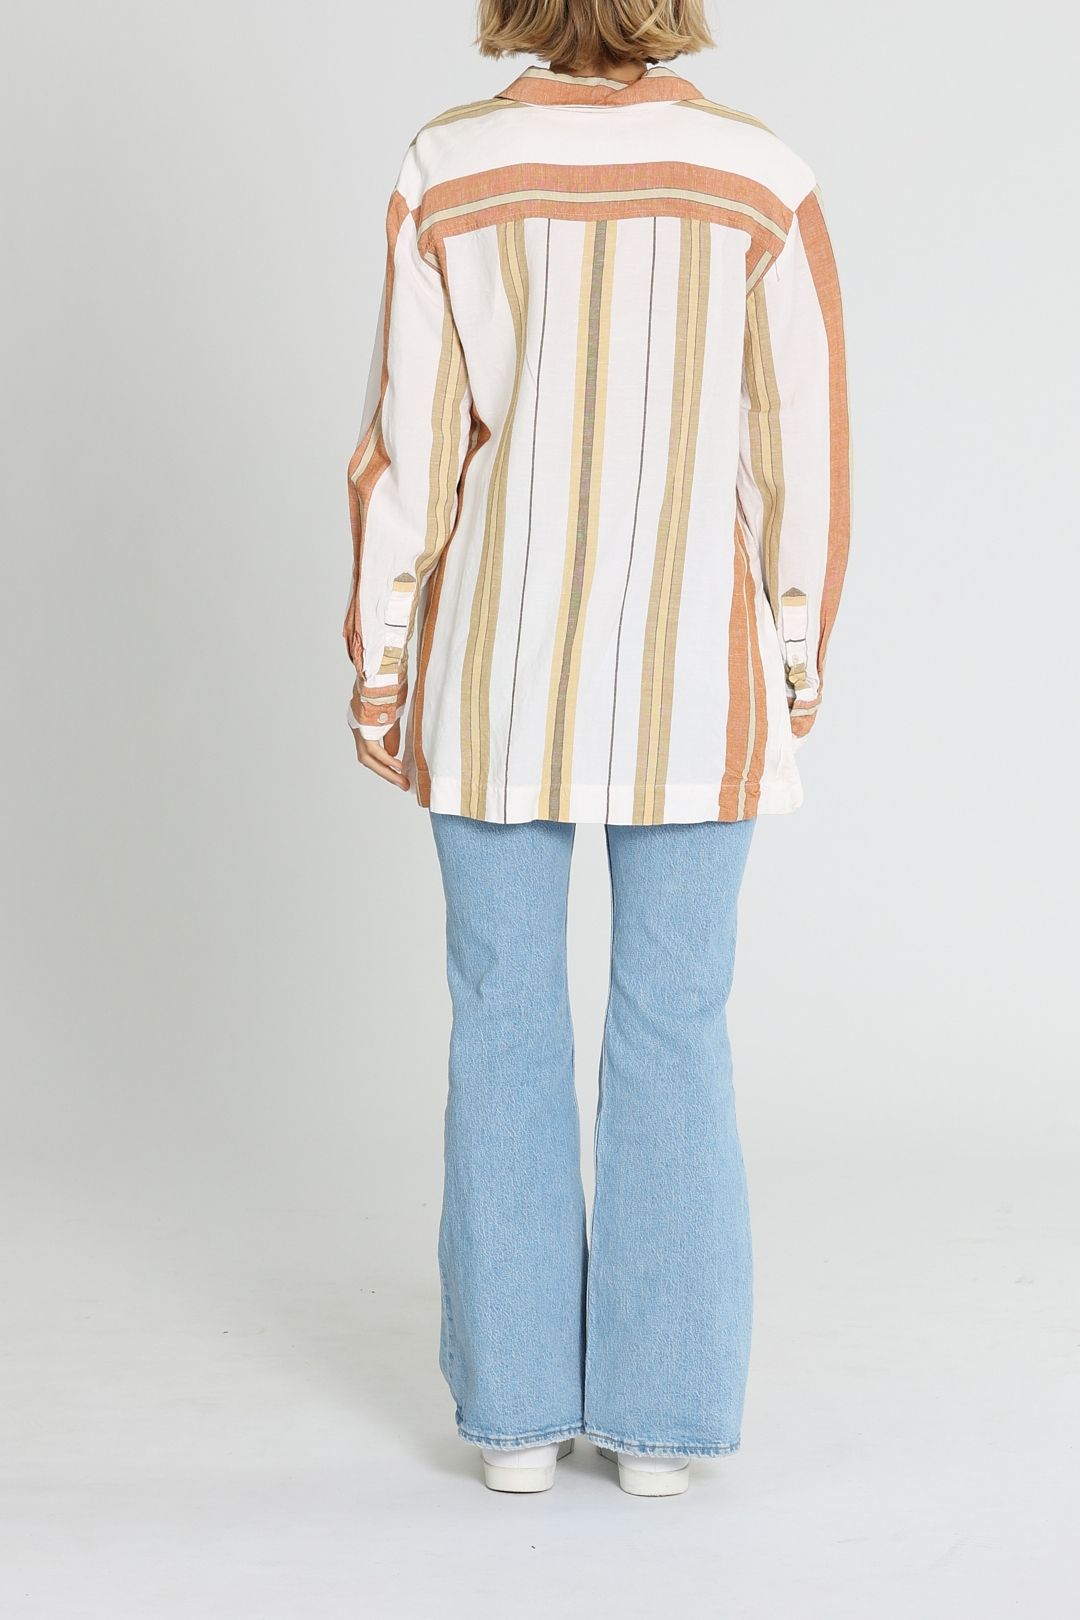 Shona Joy Suzana Button Up Shirt Long Sleeves